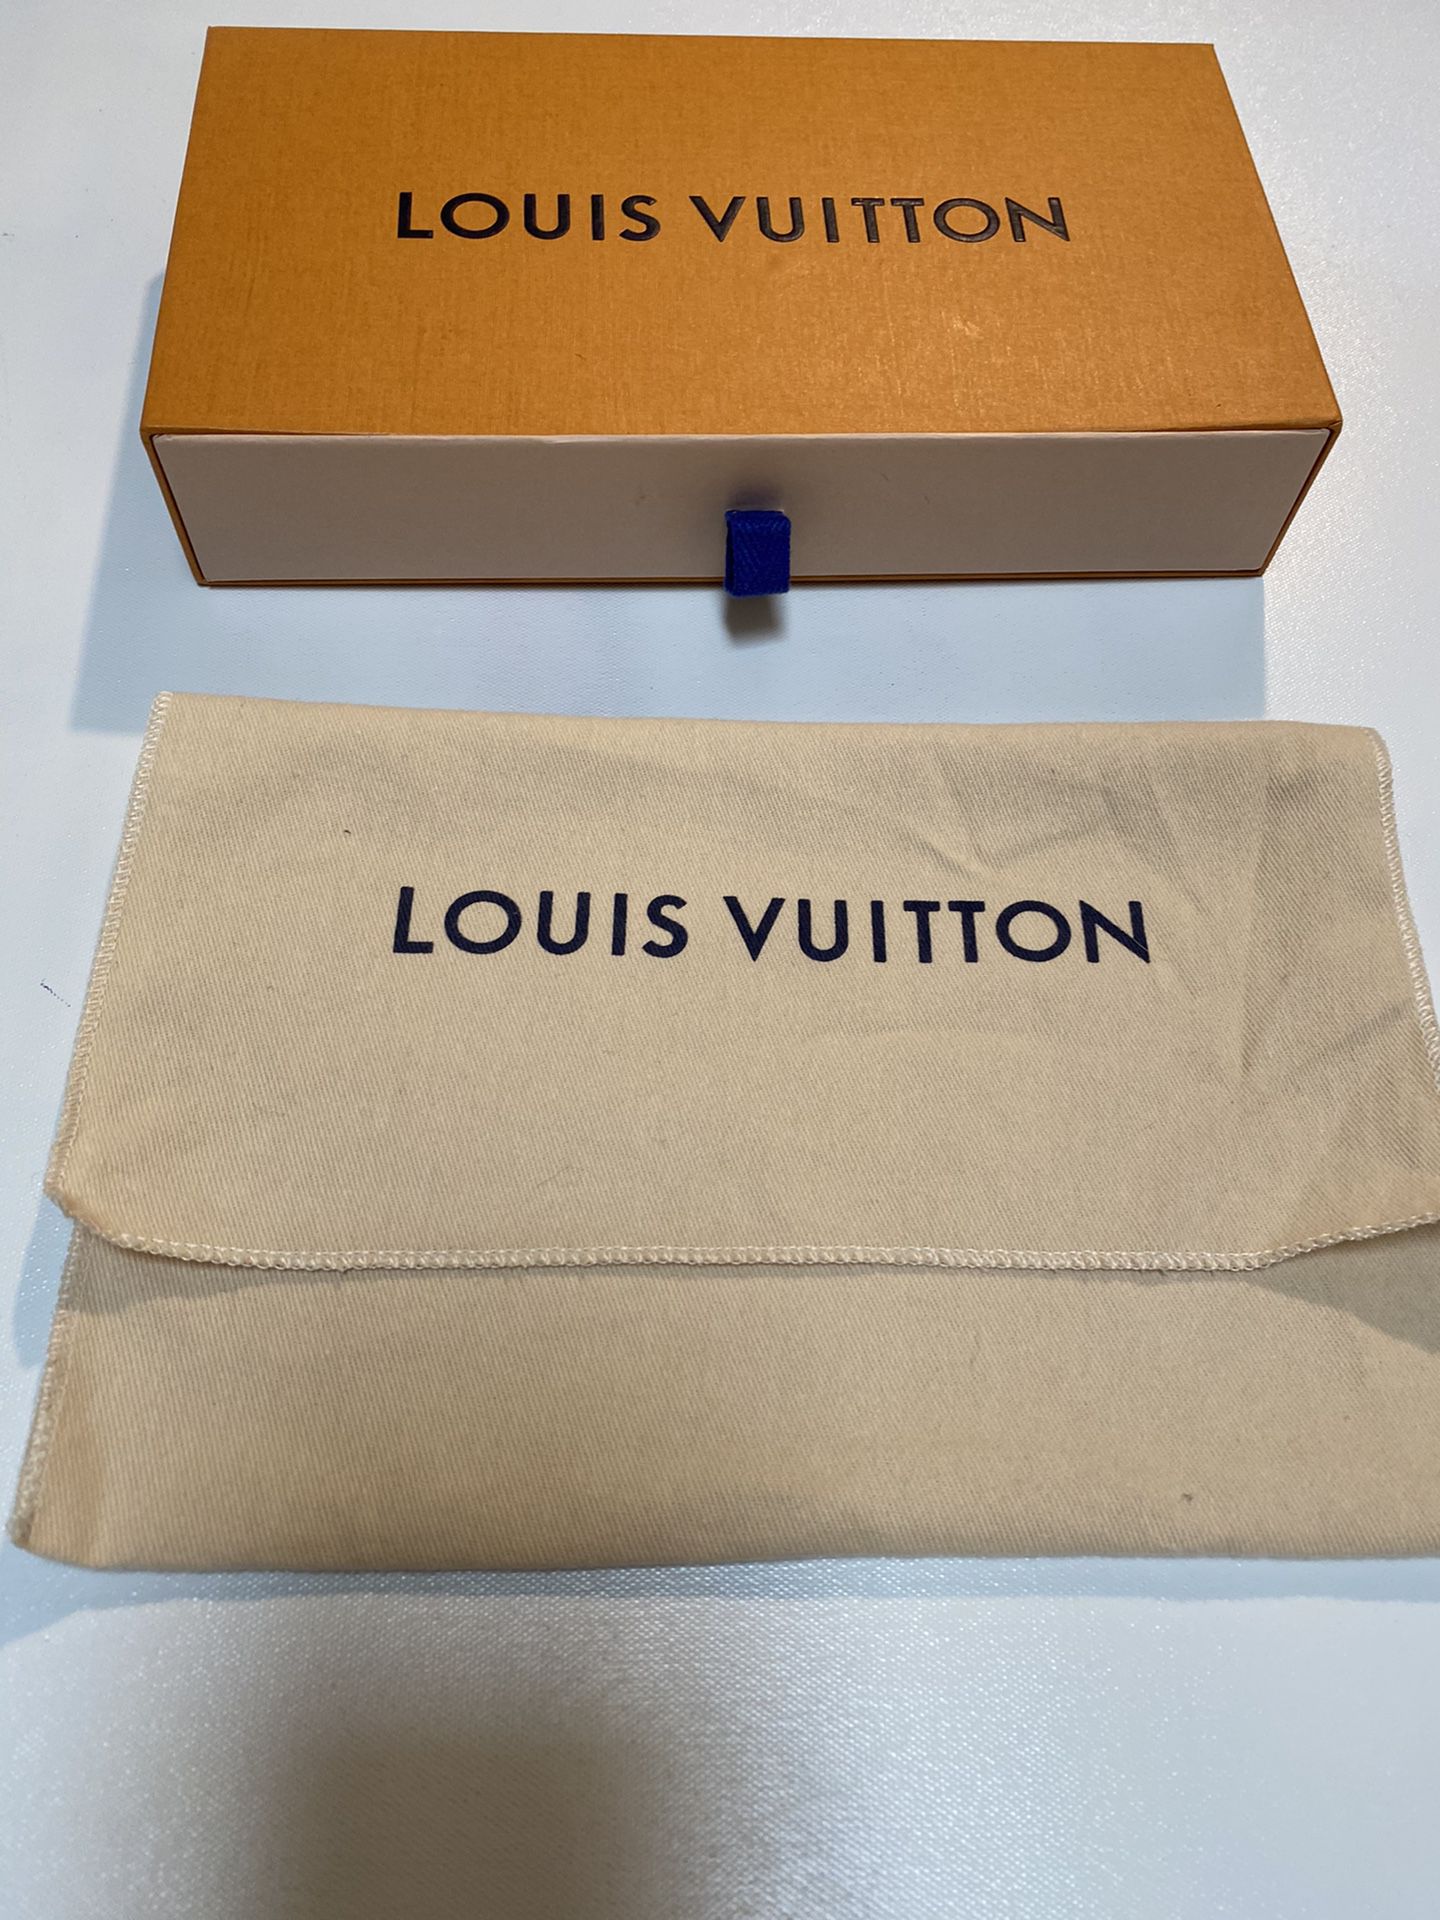 Louis Vuitton dust bag and box